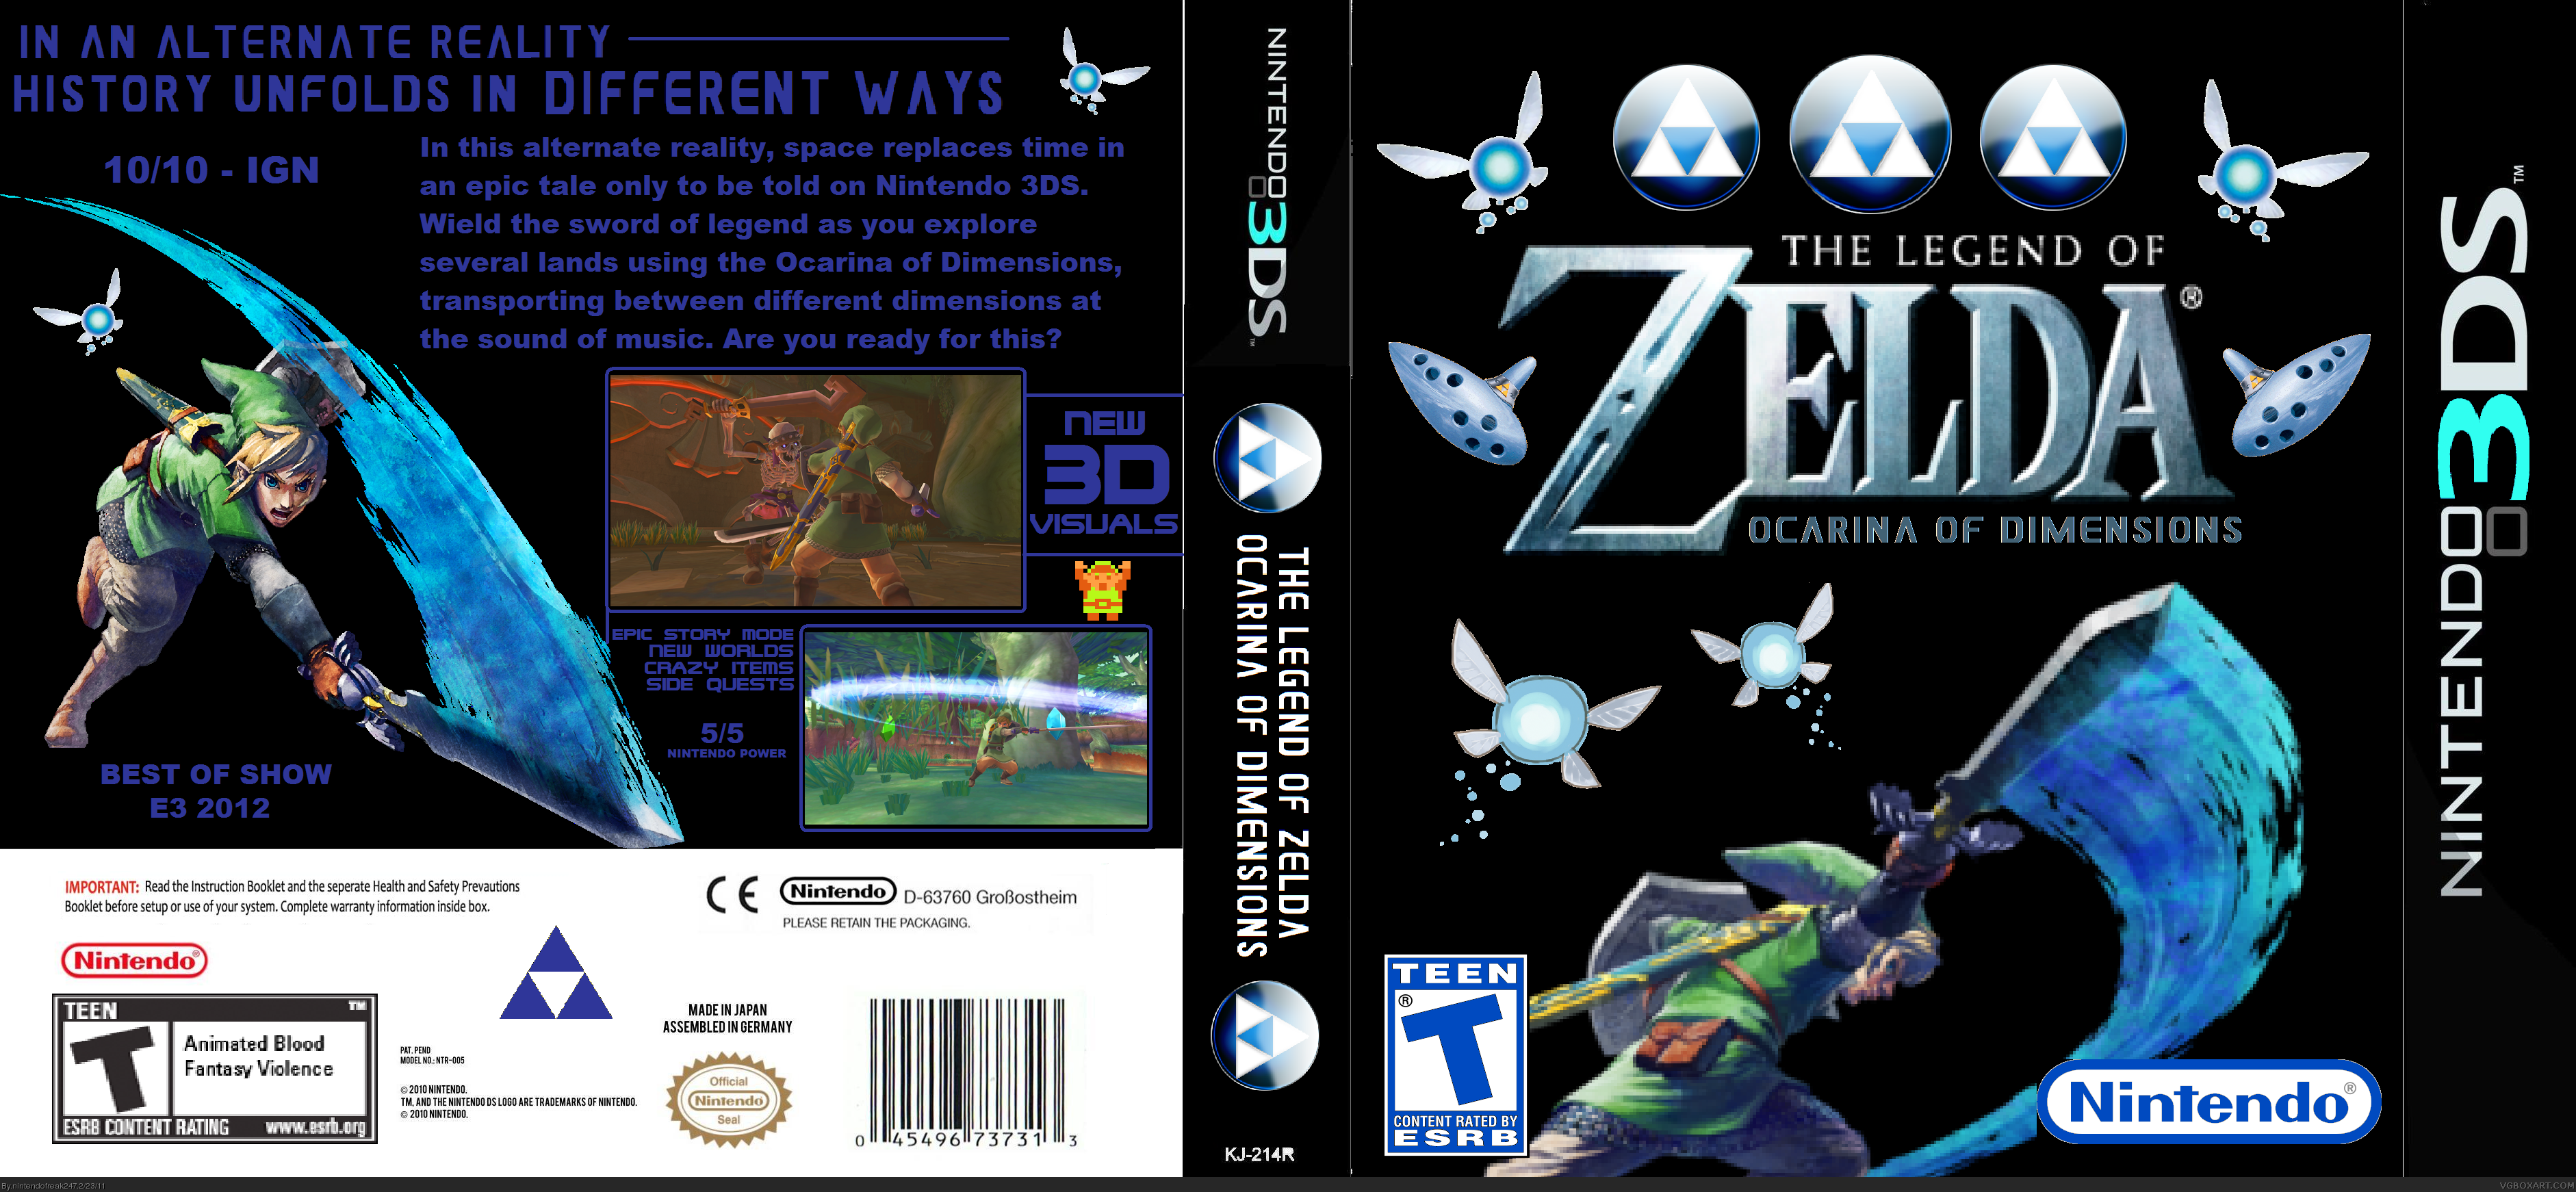 The Legend of Zelda: Ocarina of Dimensions box cover